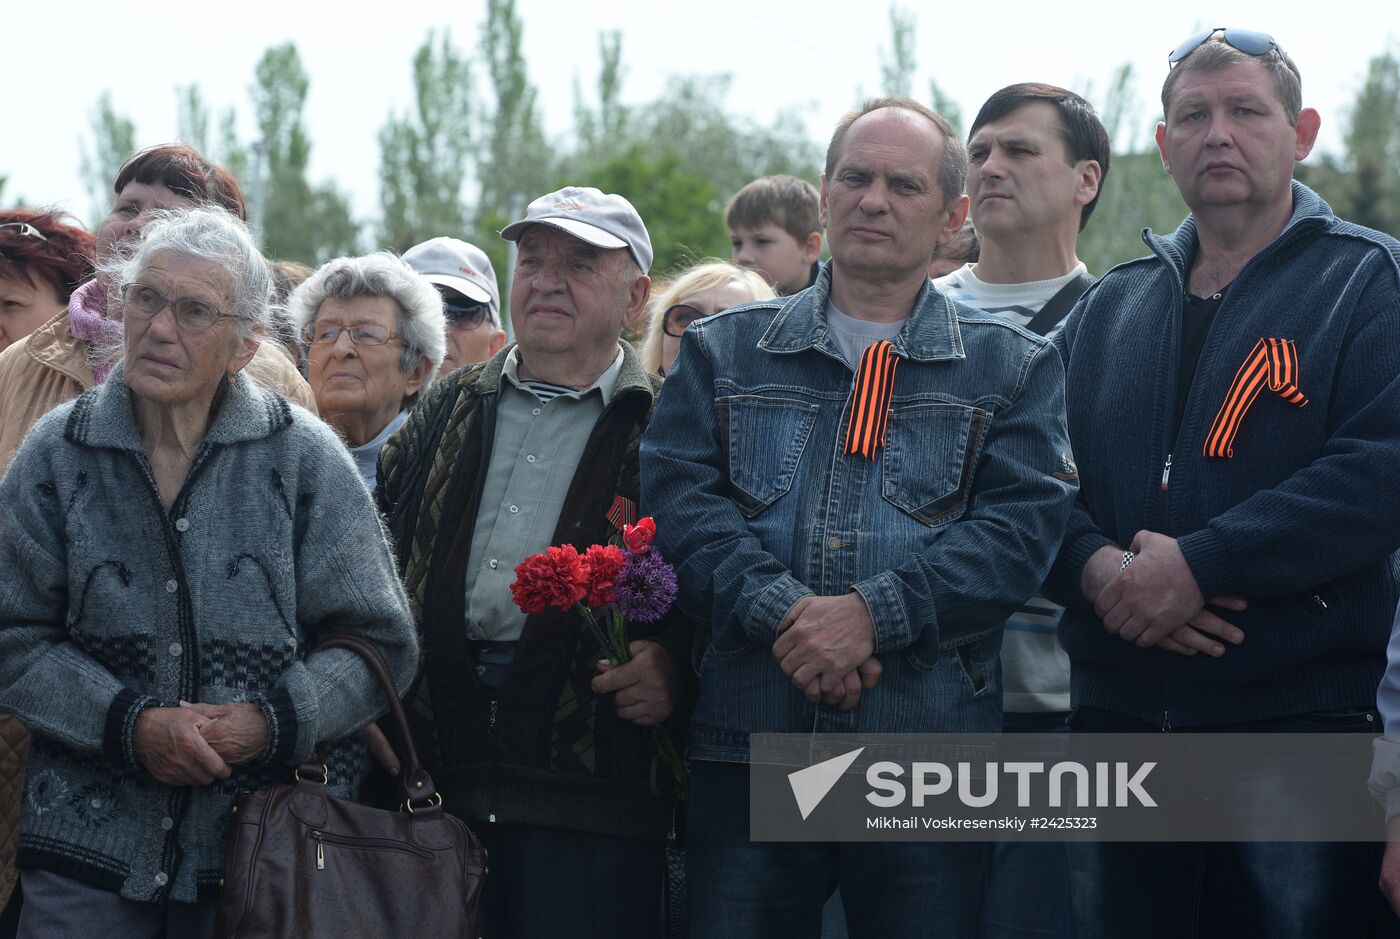 Victory Day celebrations in Slaviansk